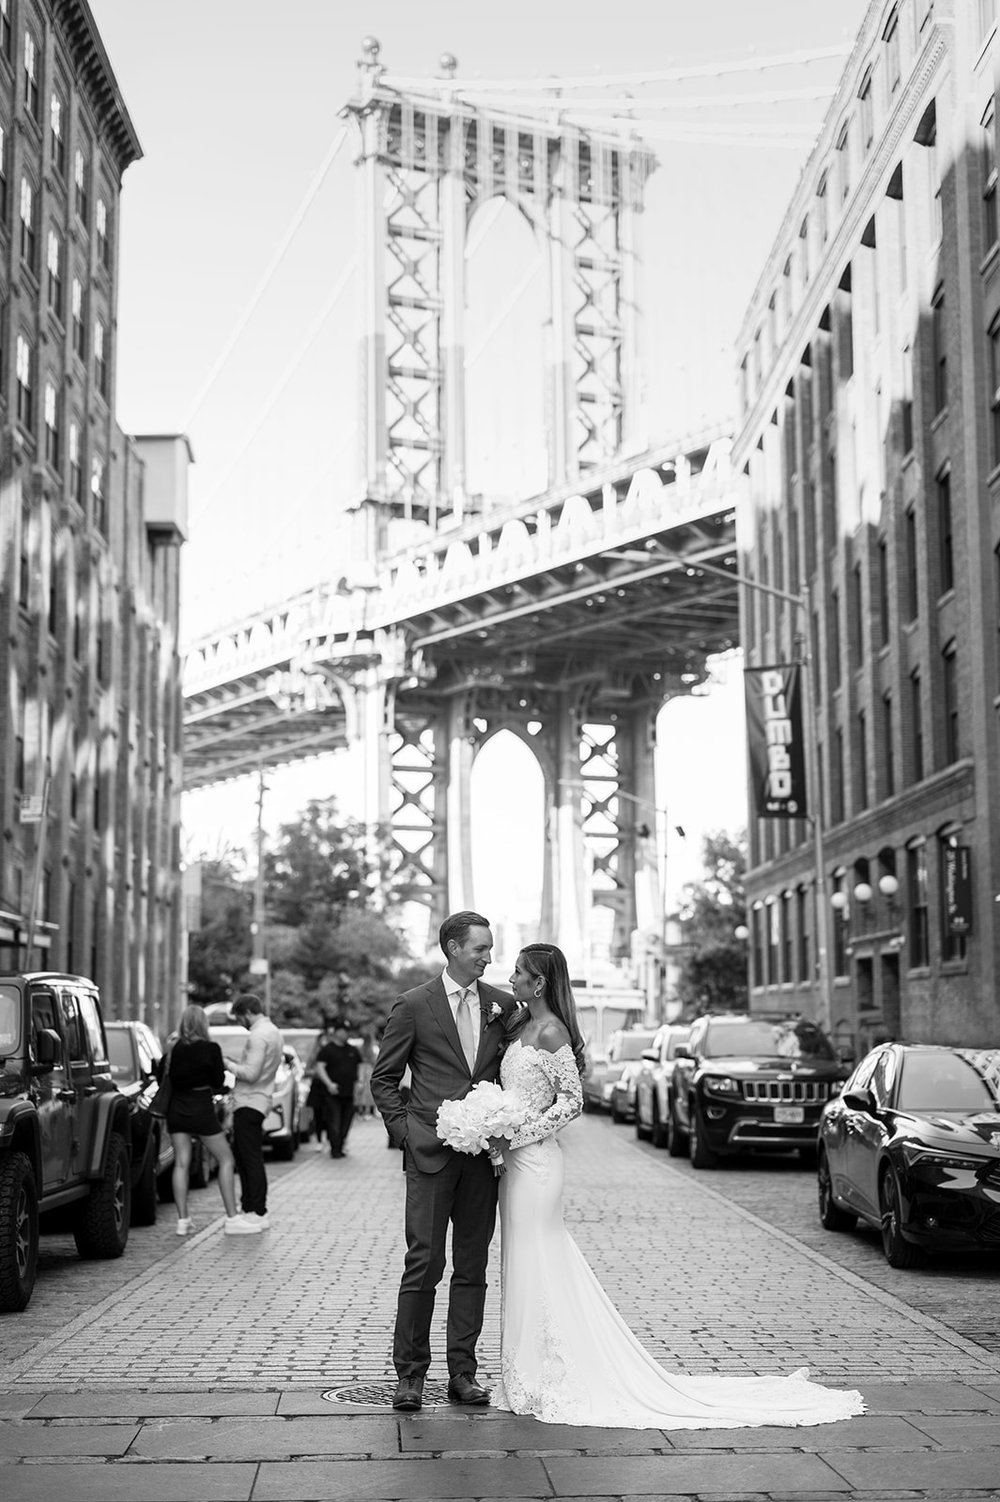  wedding photos of couple from new york wedding photographer 